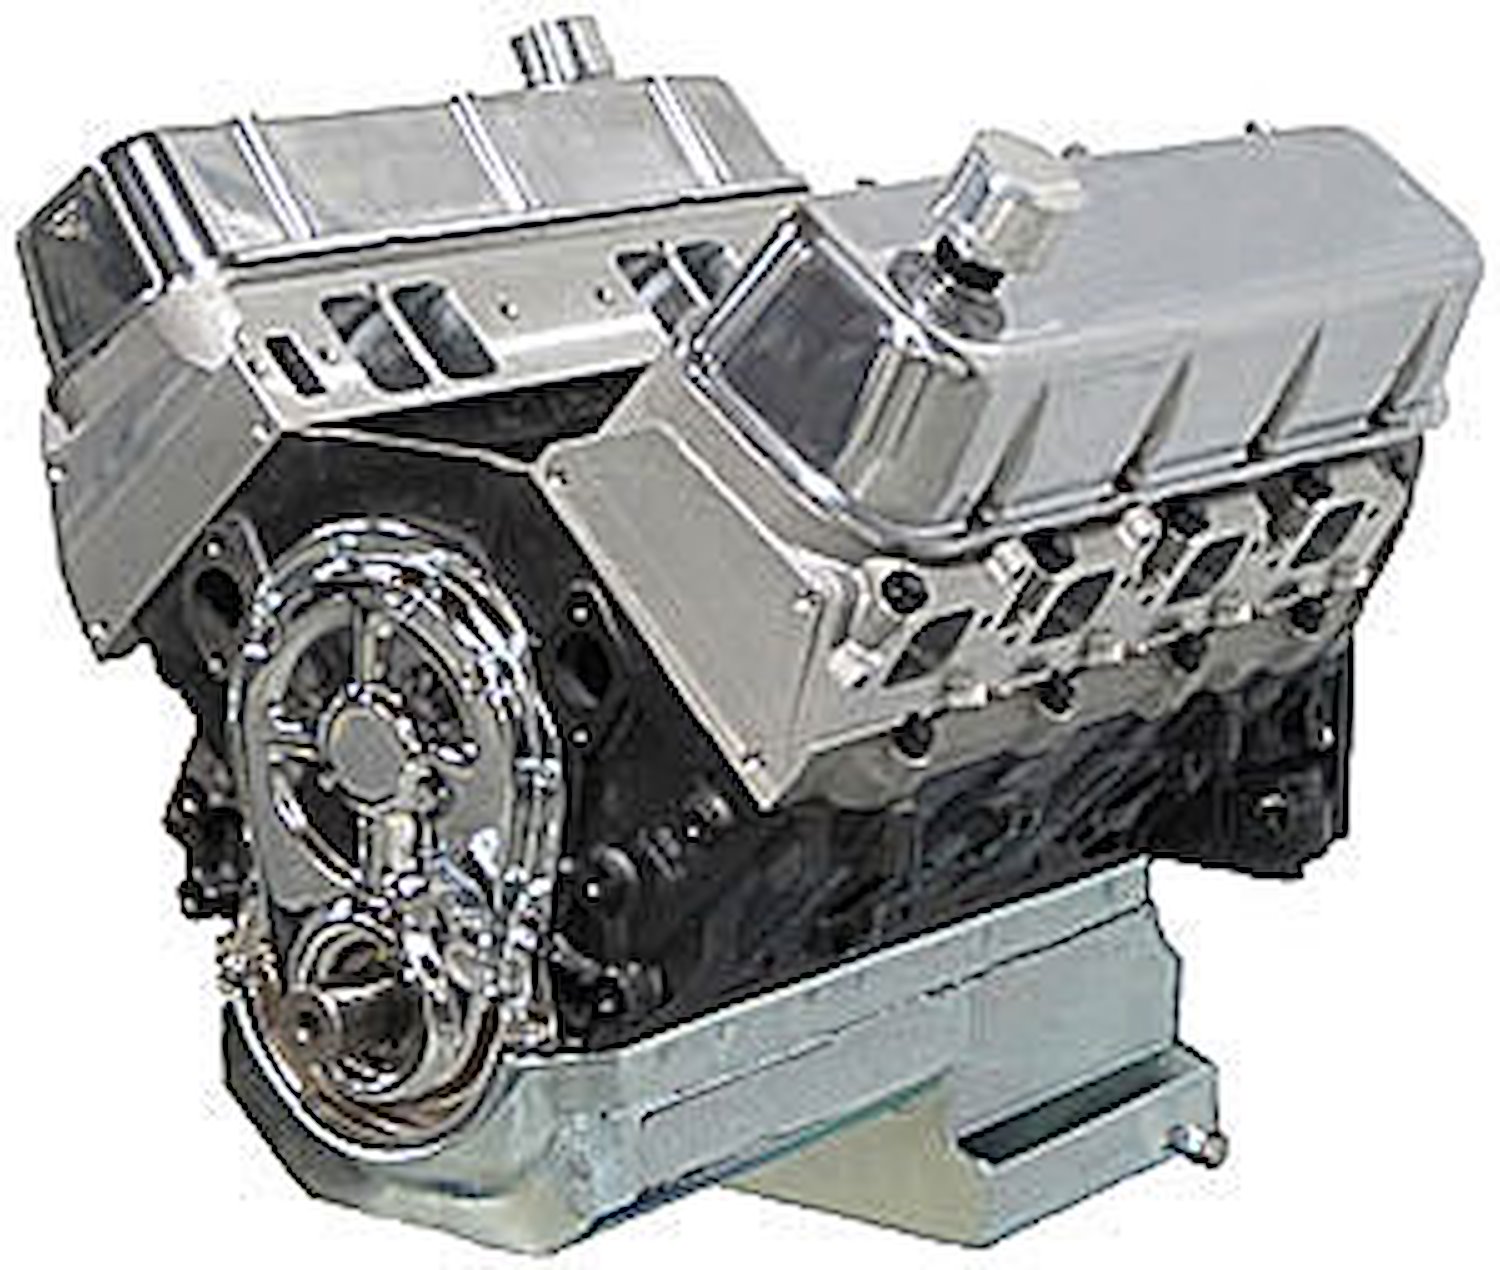 Pro Series Big Block Chevy 509ci/640HP/605TQ Base Engine